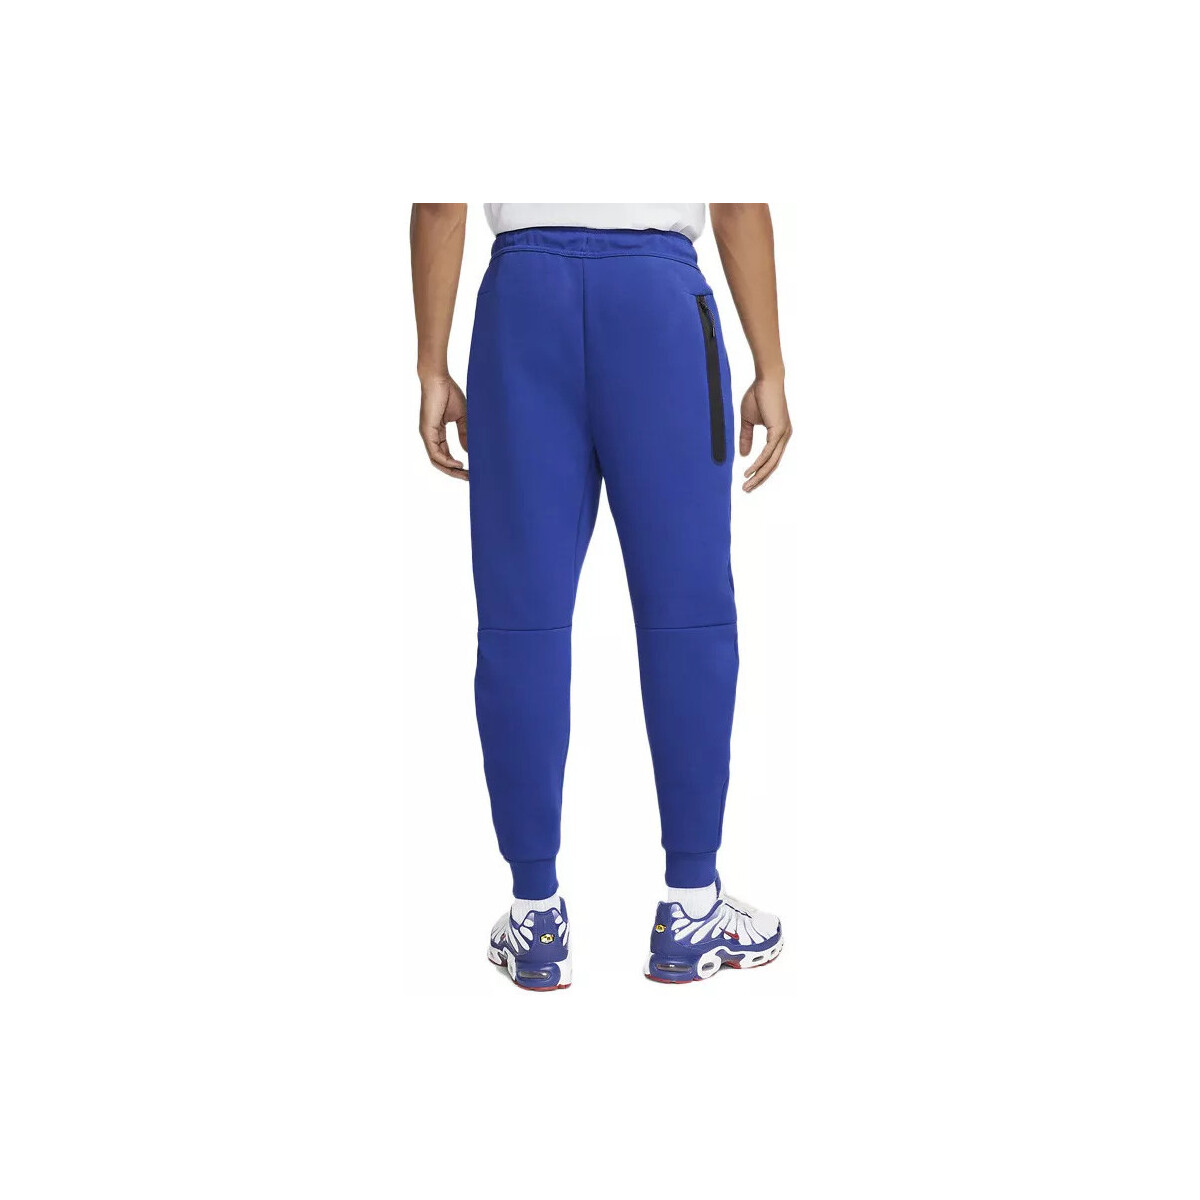 Nike Bleu TECH FLEECE pxoFd16X